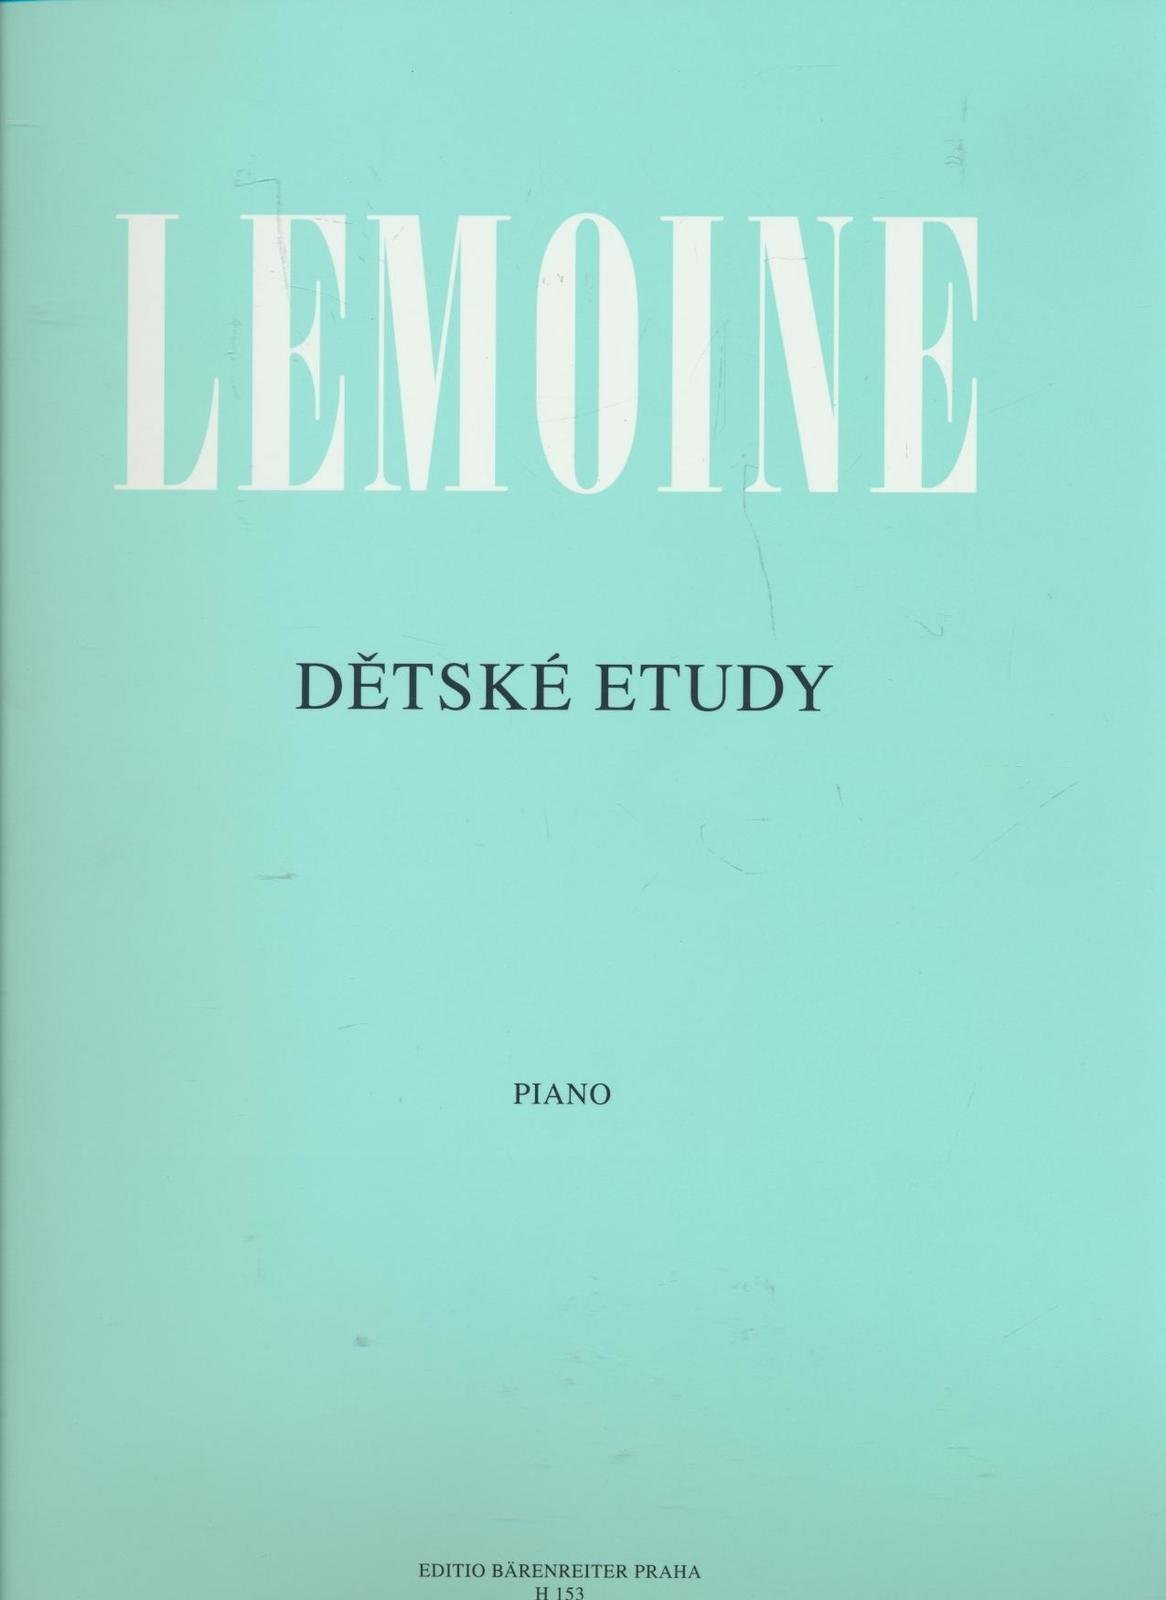 Partitura para pianos Henri Lemoine Detské etudy op. 37